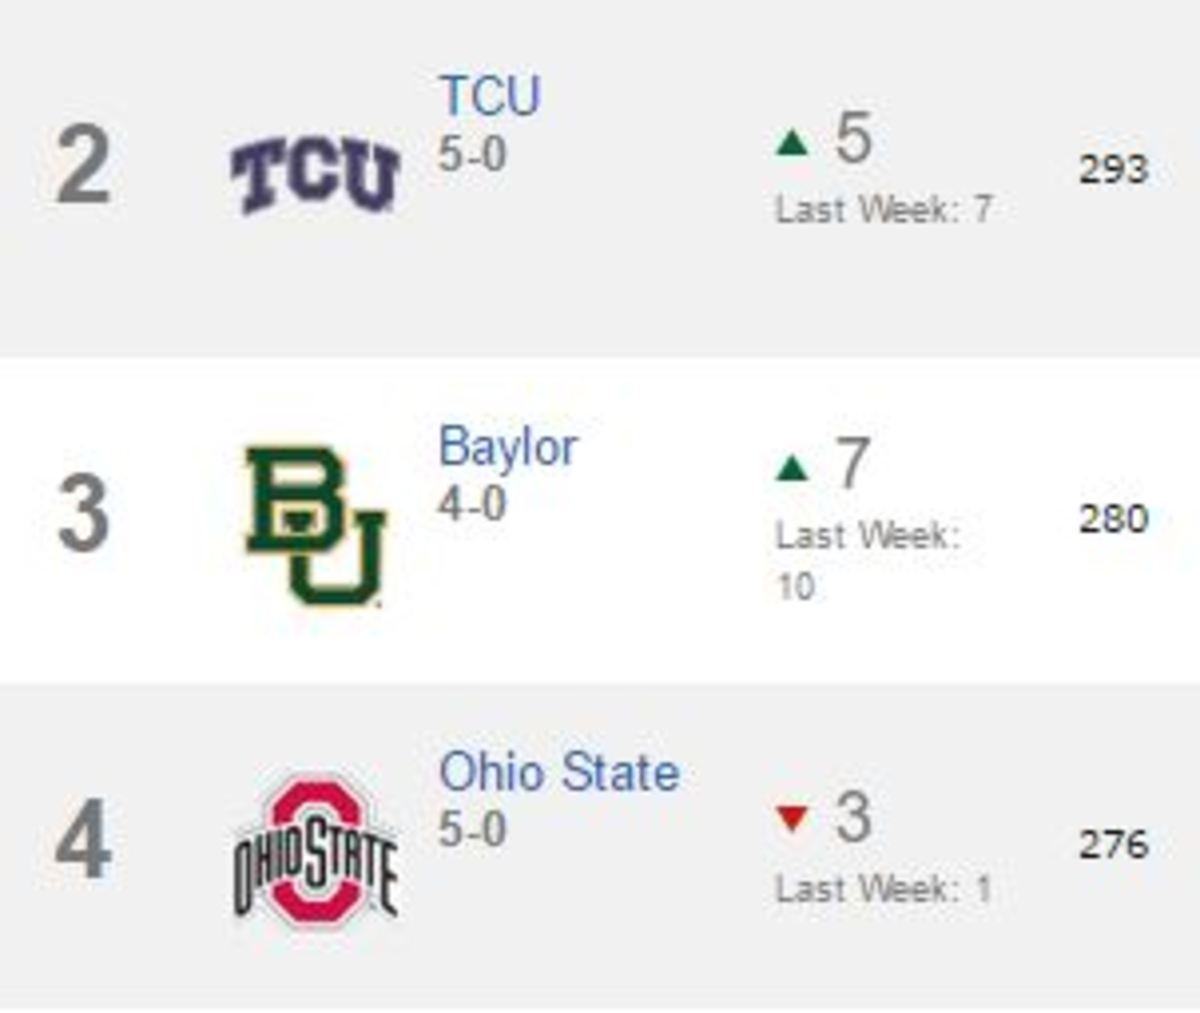 ESPN power rankings for teams ranked 2 through 4 for week 6 of the season.